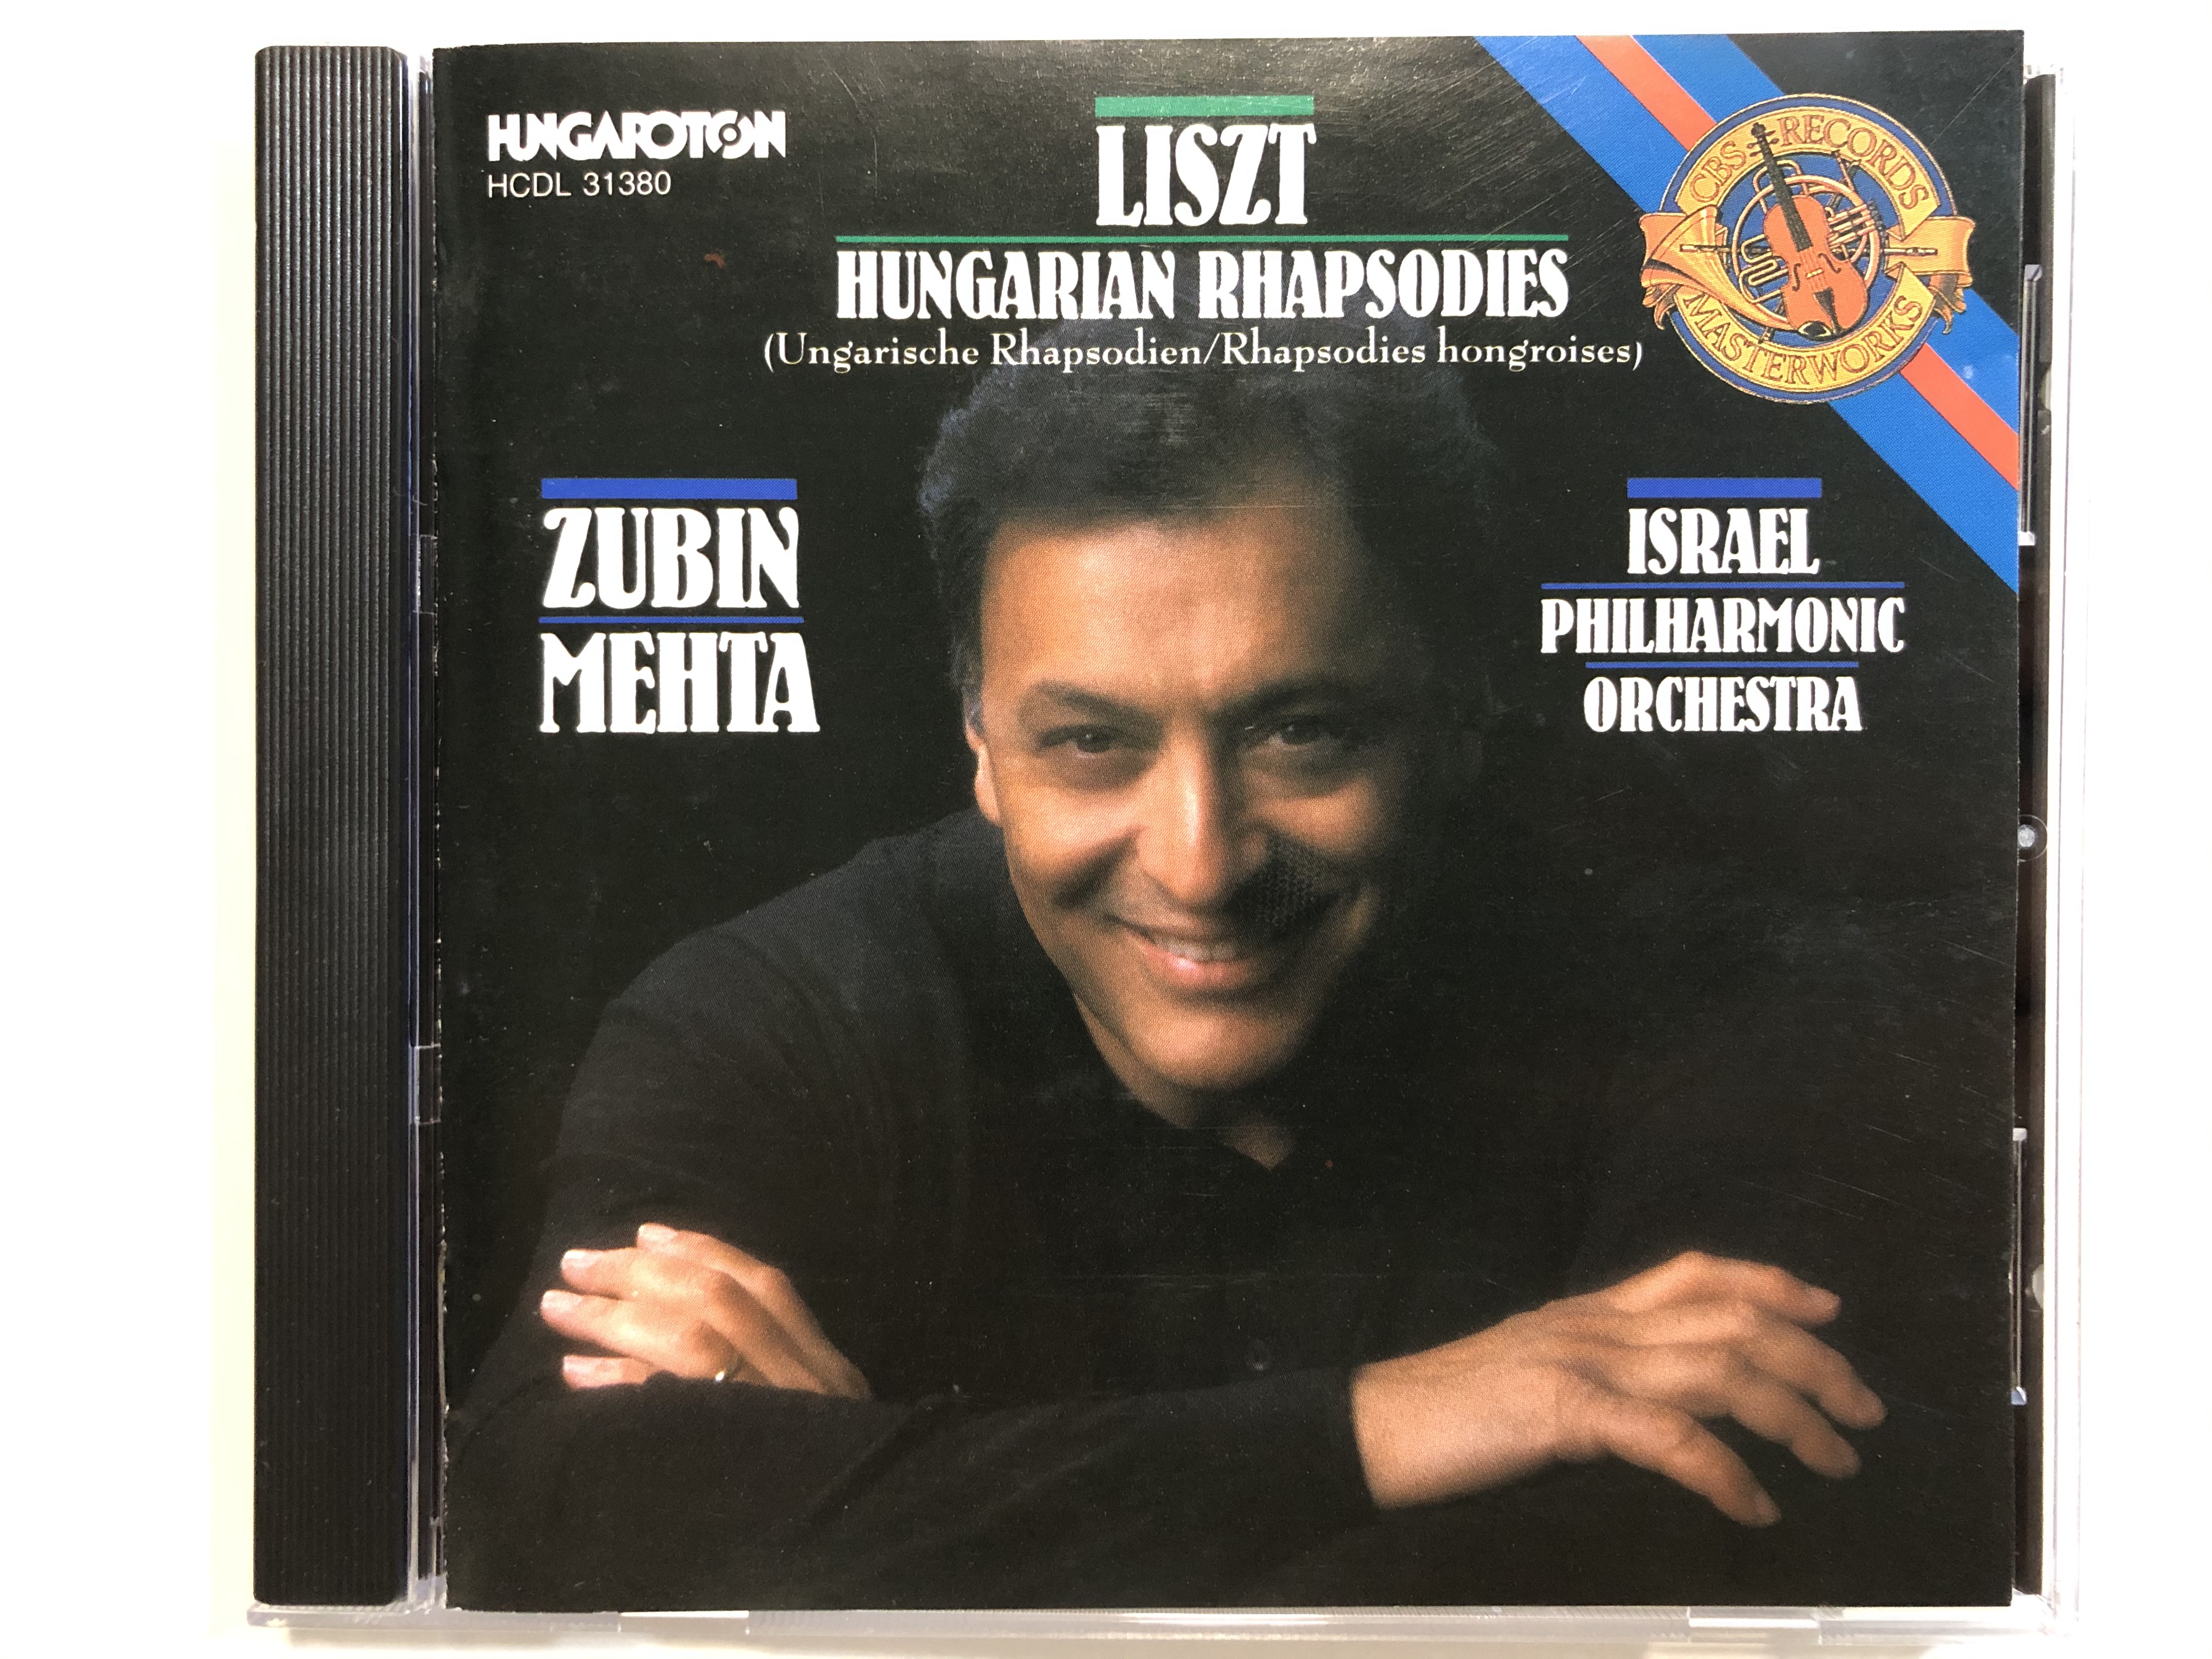 liszt-hungarian-rhapsodies-ungarische-rhapsodienrhapsodies-hongroises-zubin-mehta-israel-philharmonic-orchestra-hungaroton-audio-cd-1990-stereo-hcdl-31380-1-.jpg